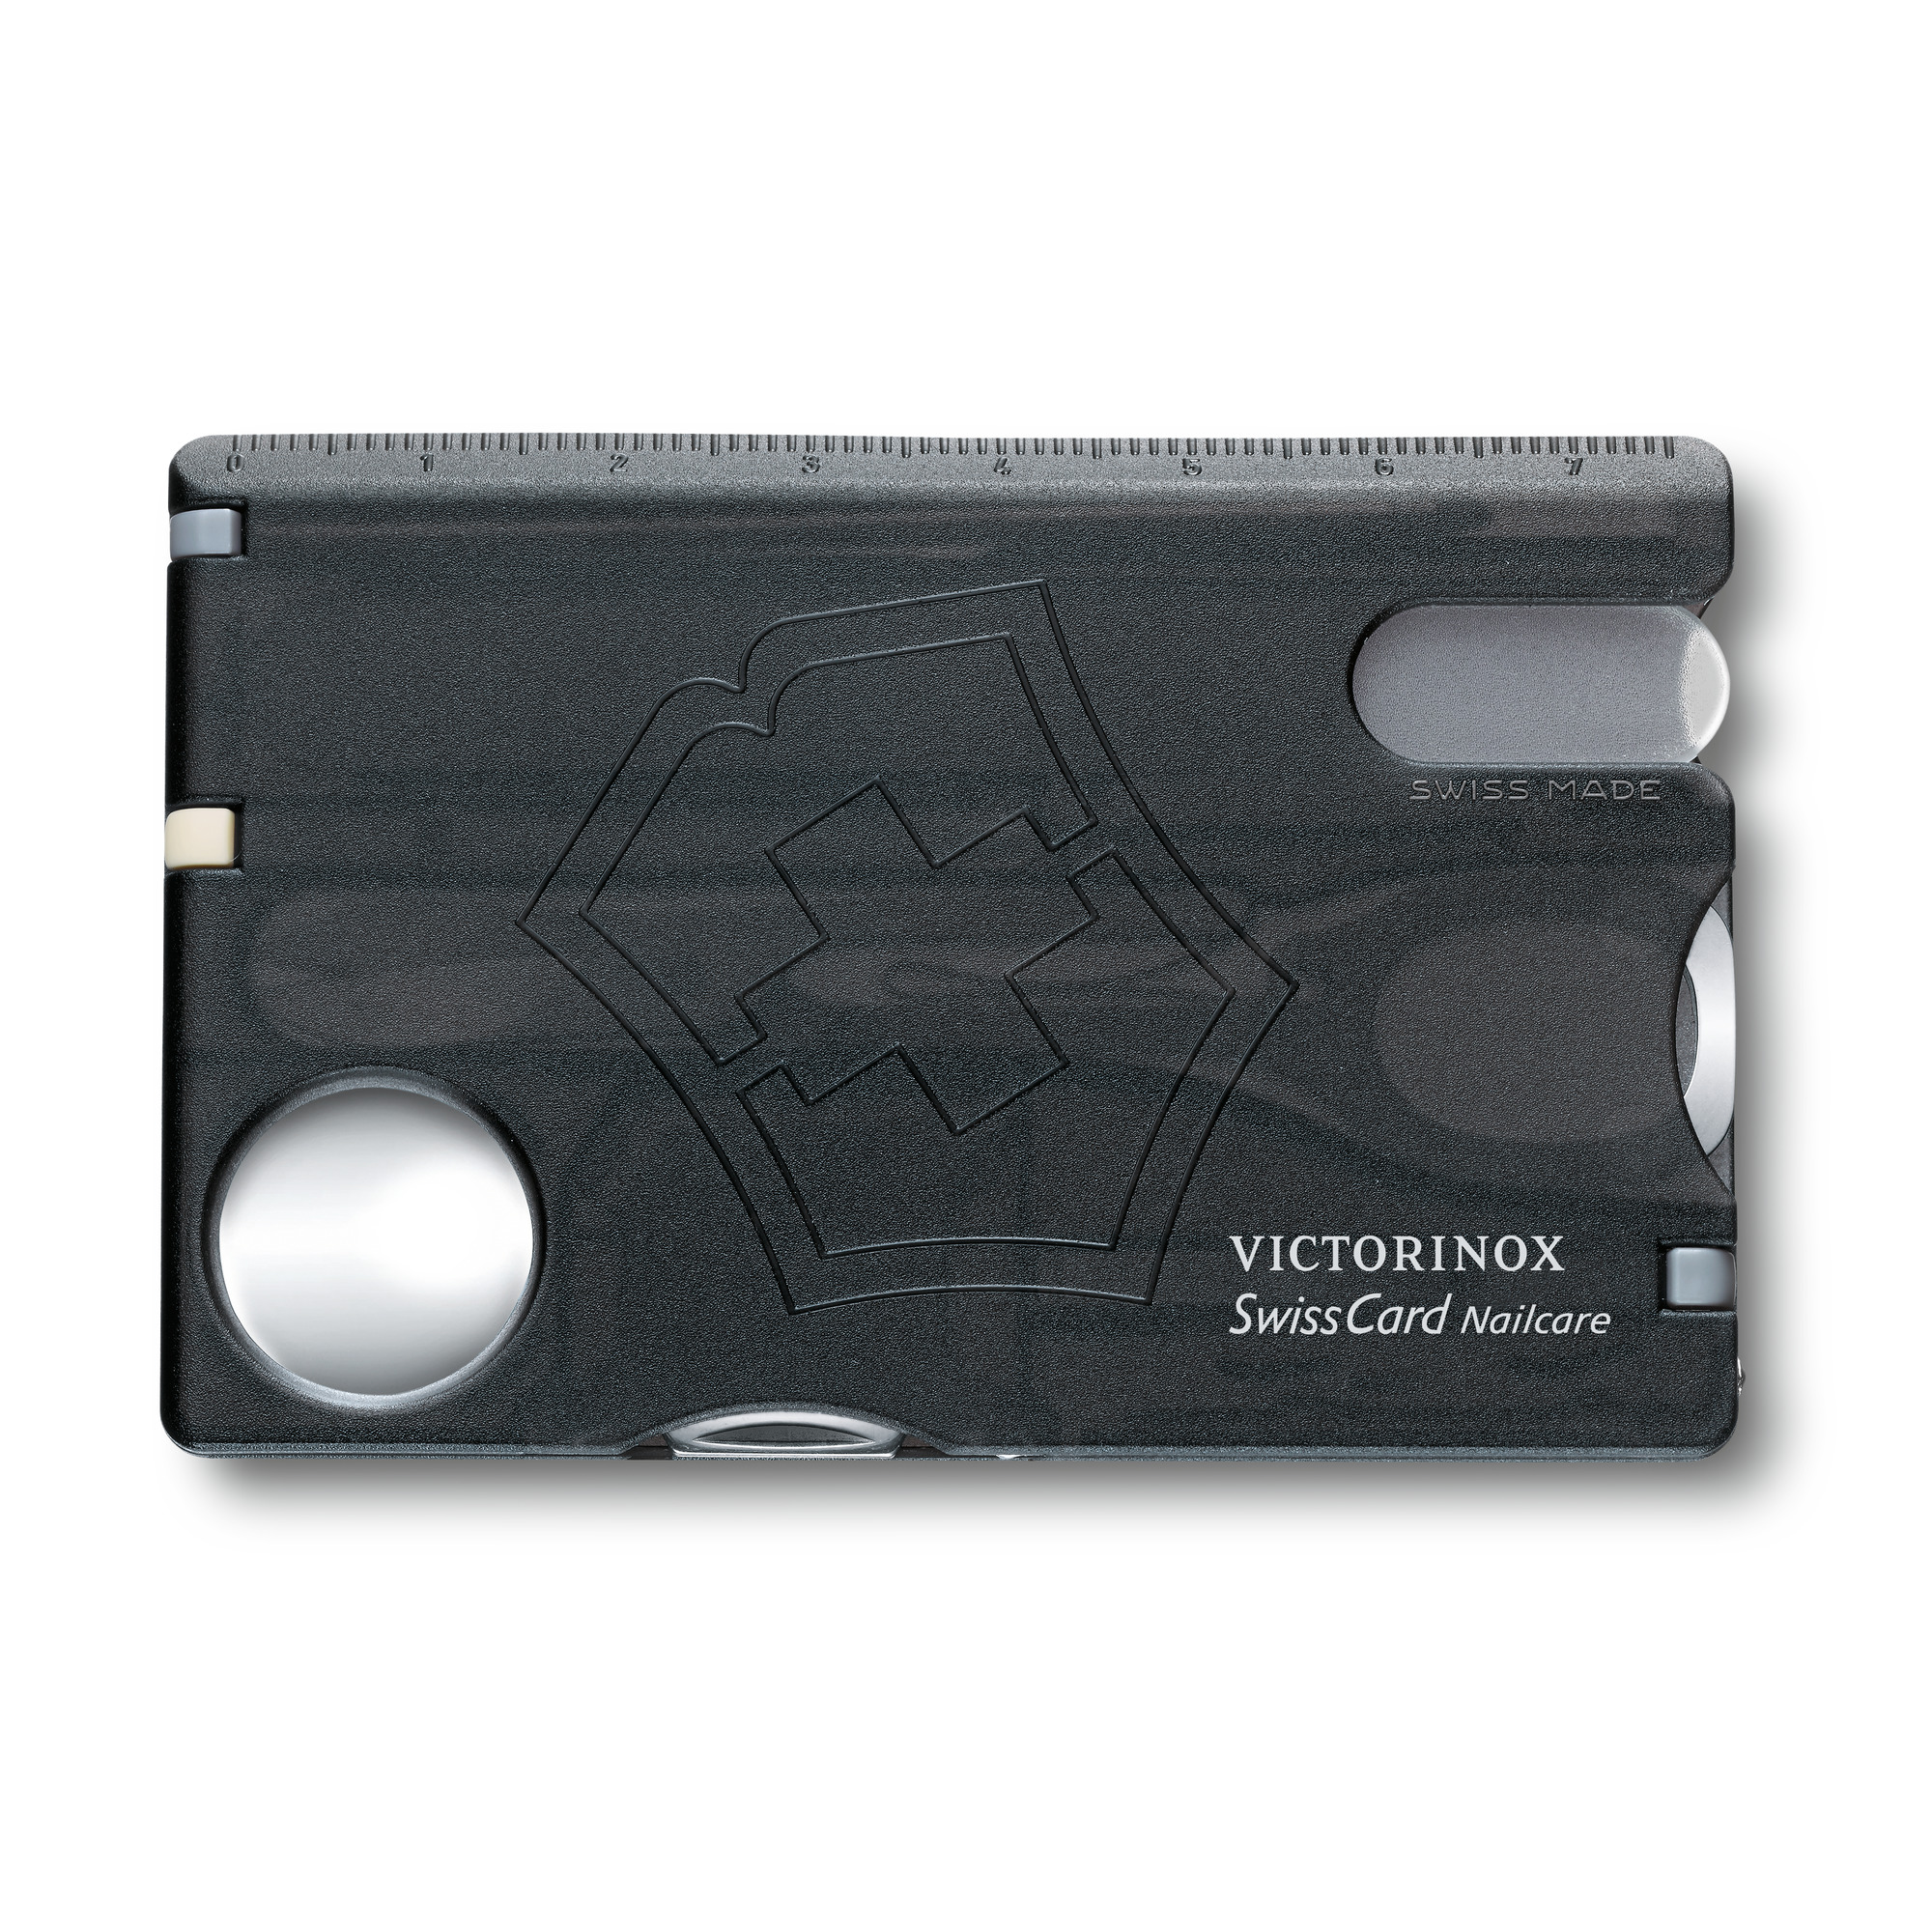 Victorinox Swiss Card Nailcare schwarz transparent